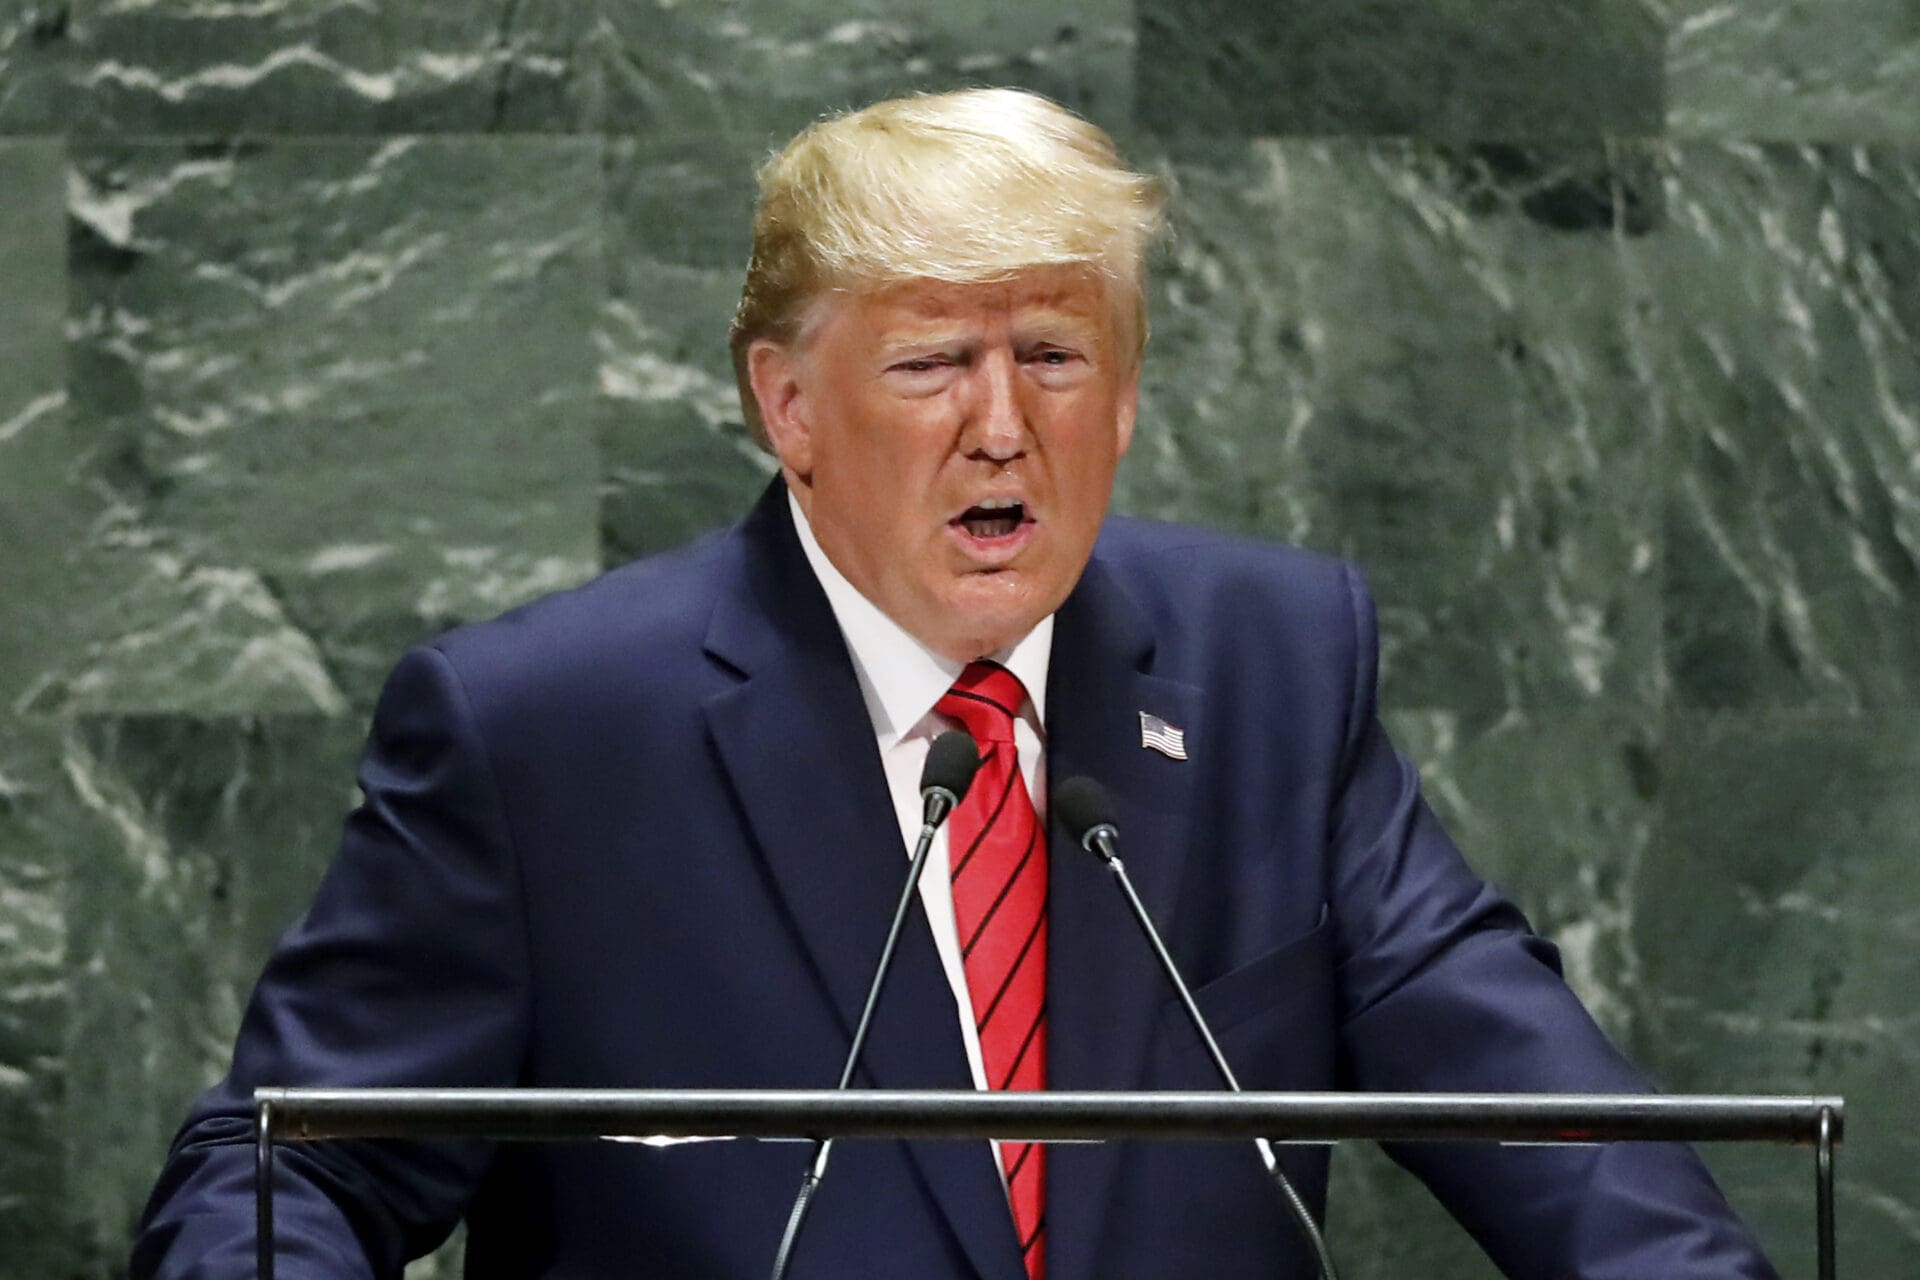 Donald Trump speech at United Nations